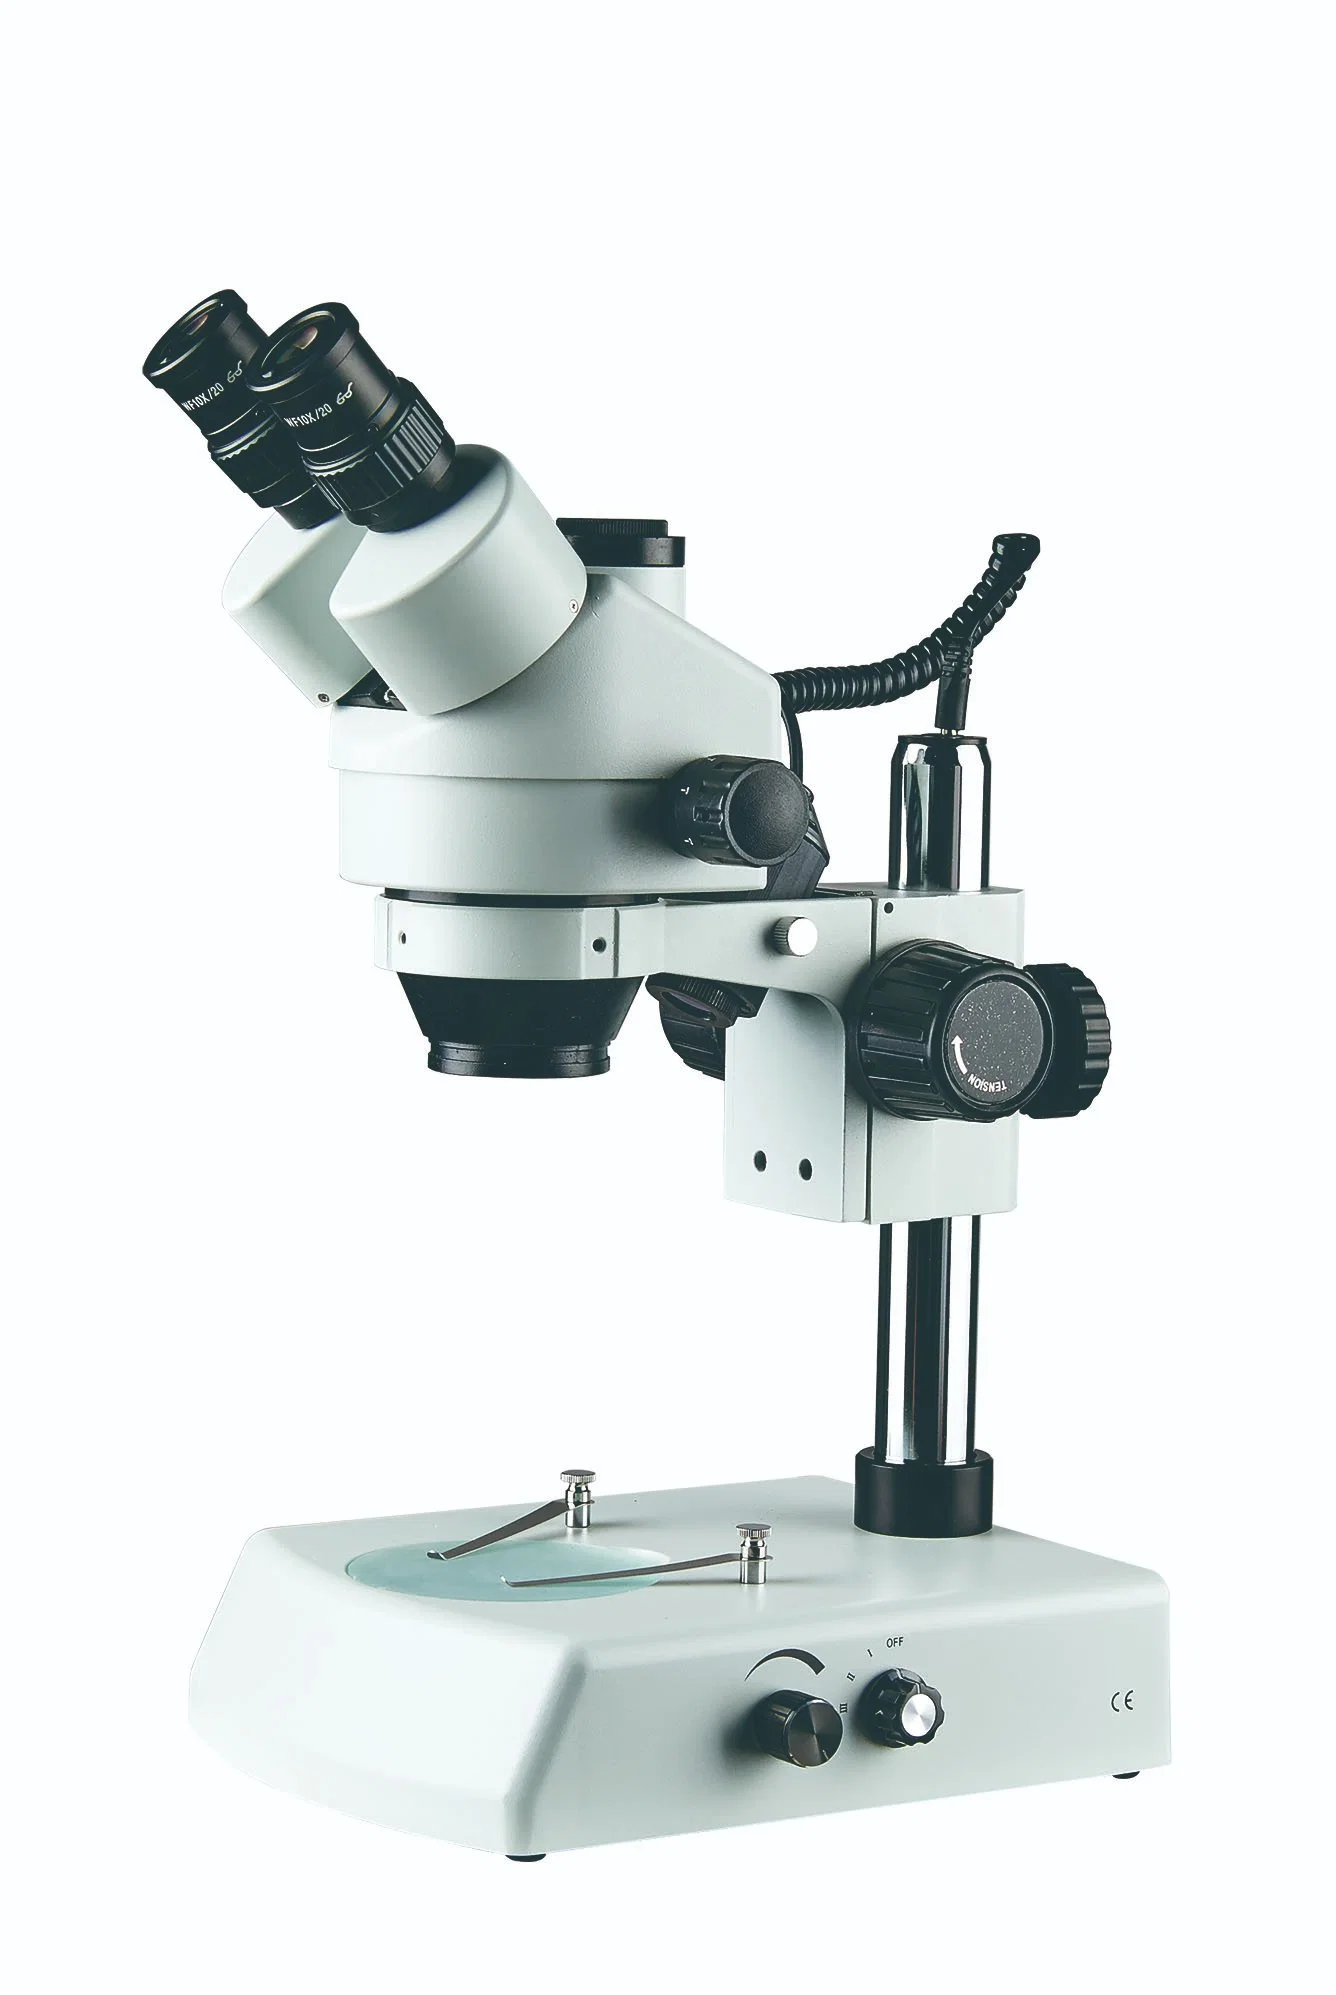 Lotsin Zoom Stereo Binocular Professional Optical Trinocular Digital Microscope 7X-45X Lens